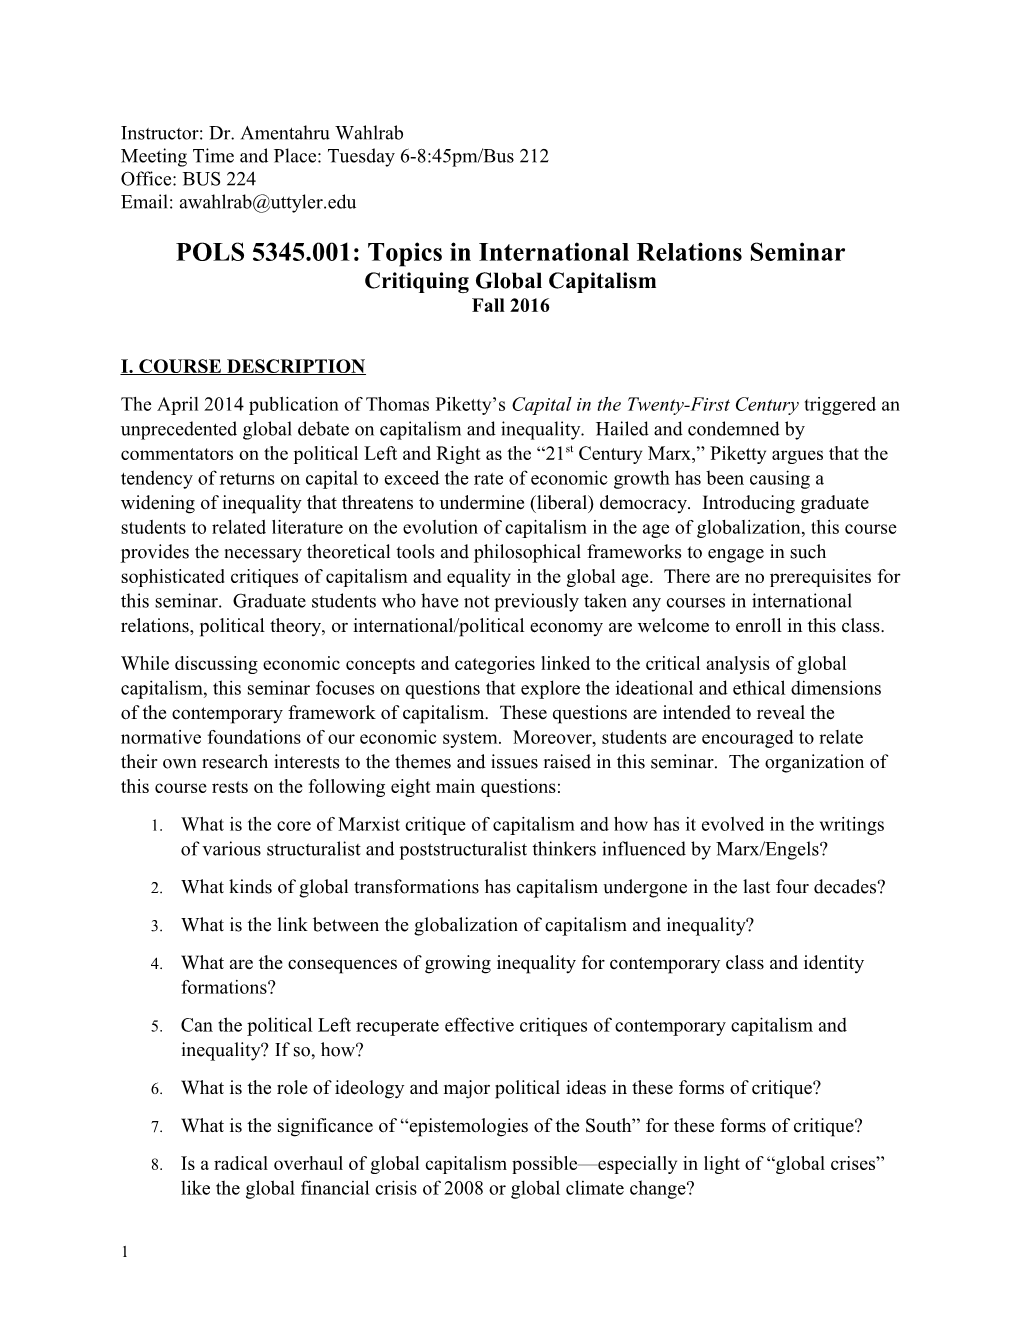 POLS 5345.001: Topics in International Relations Seminar